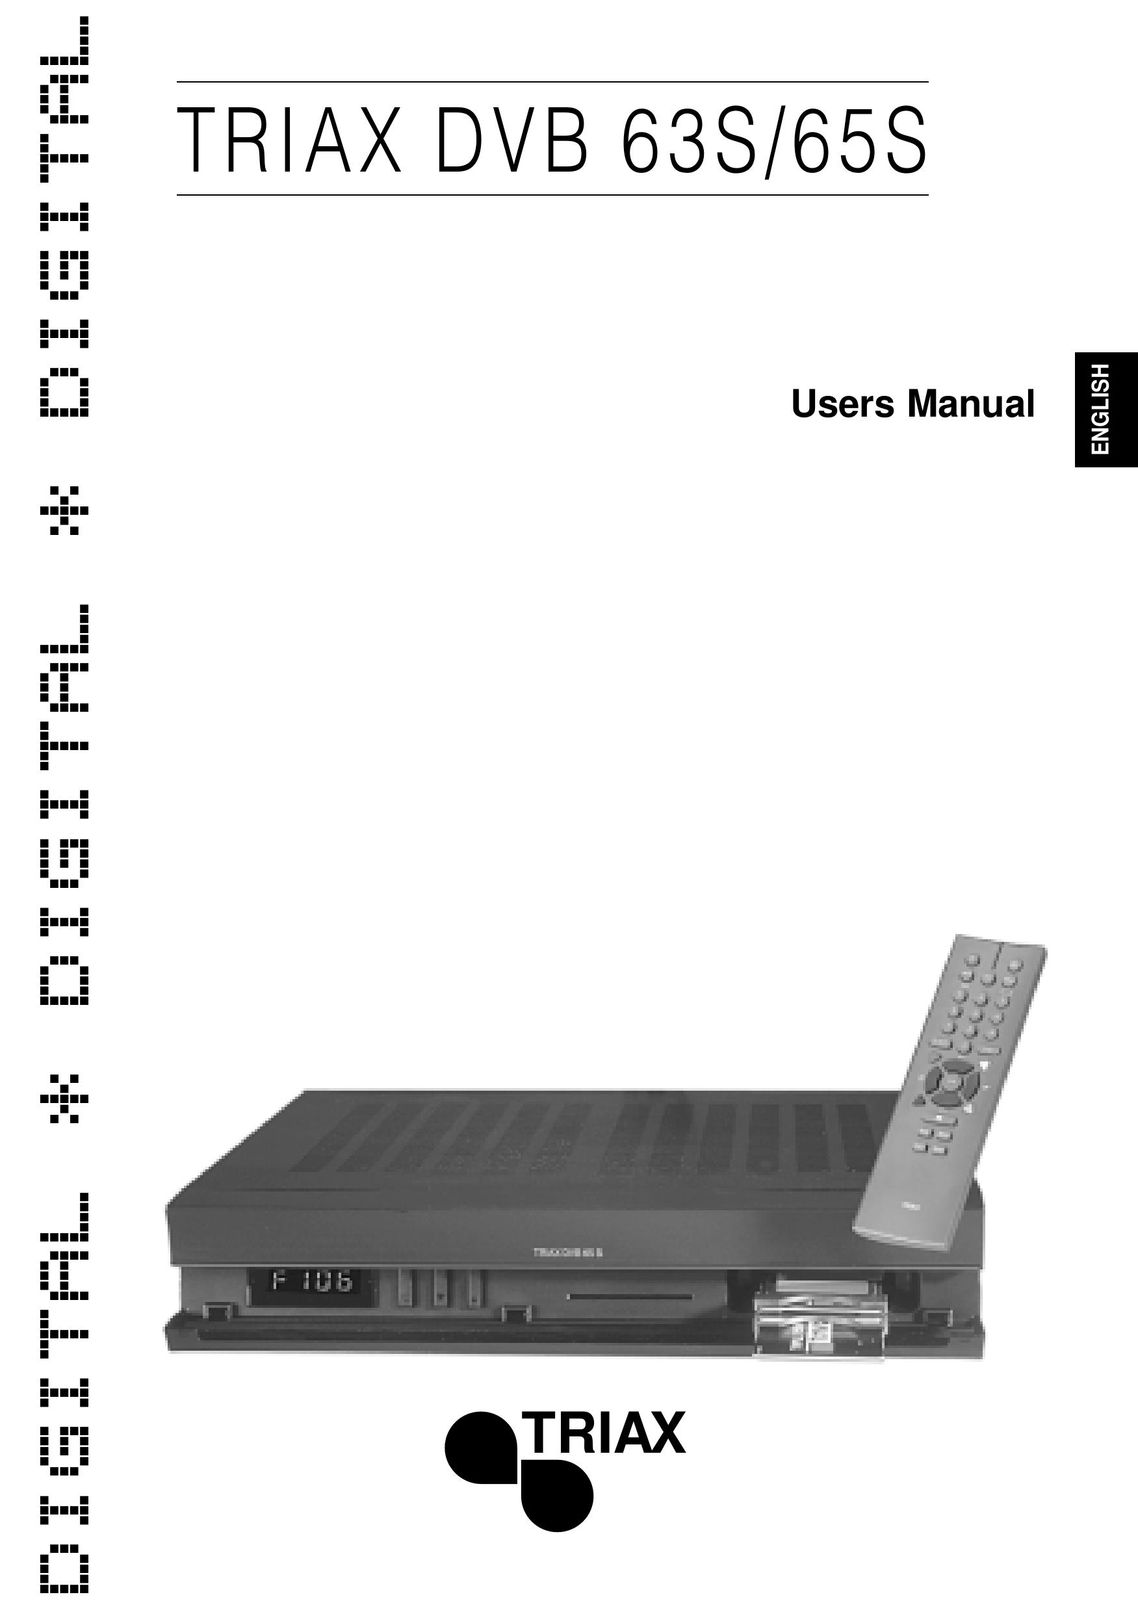 Triax DVB 63S DVR User Manual